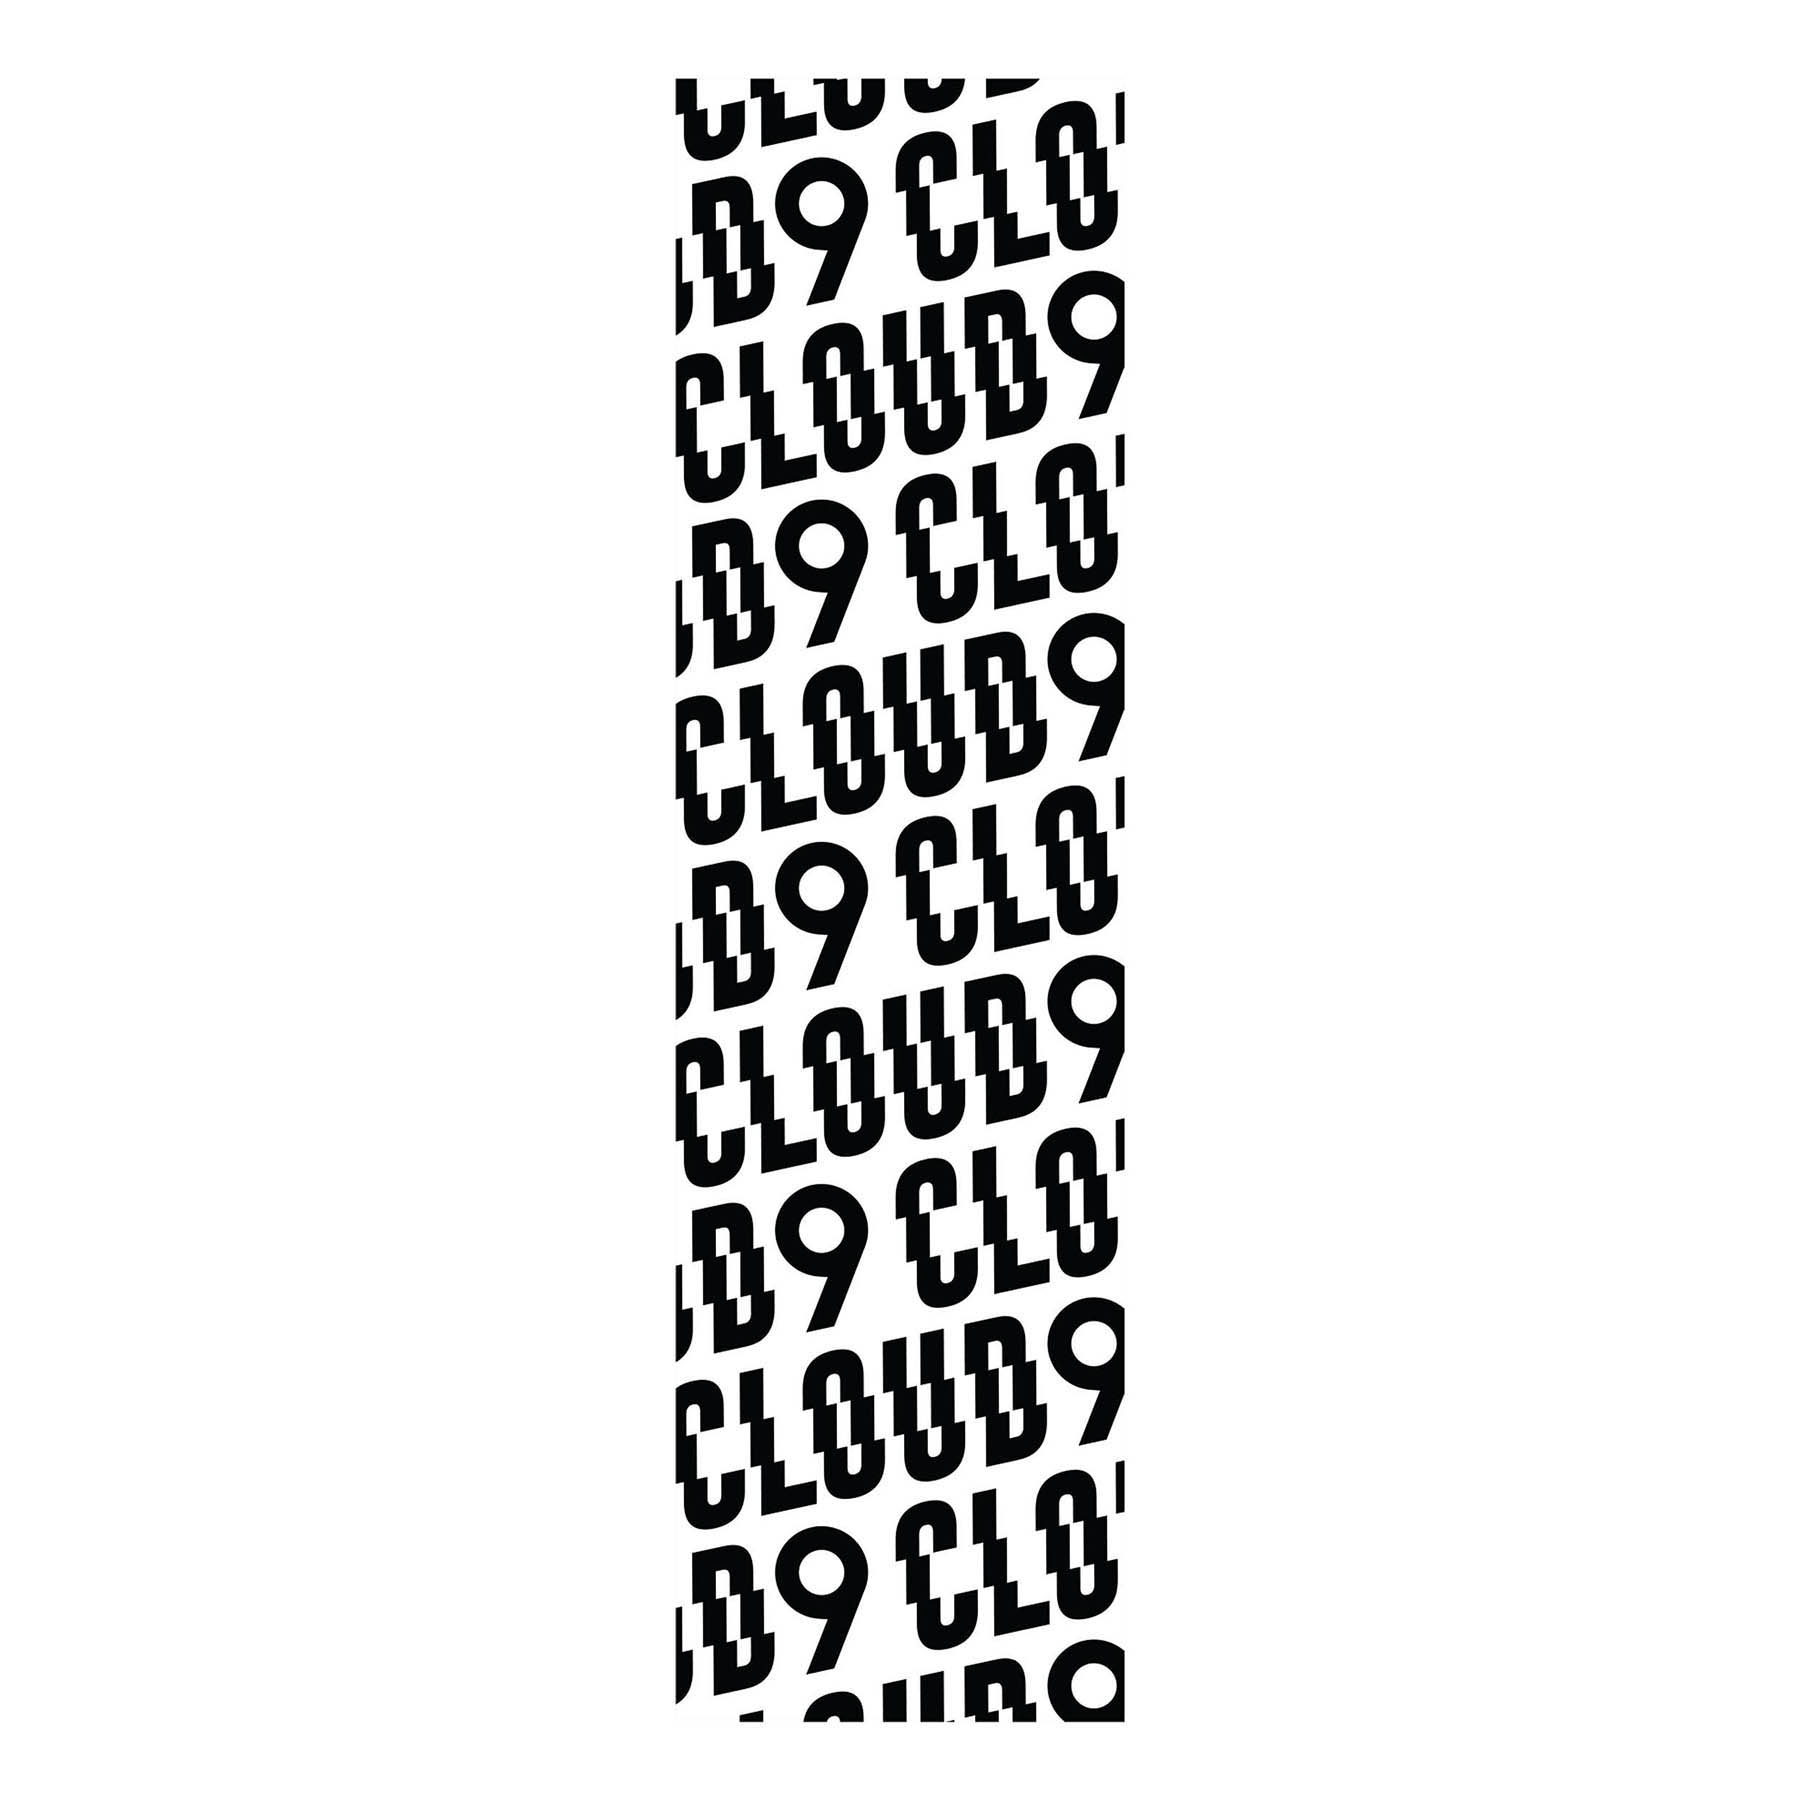 Cloud 9 Hoverboard Griptape tear away backing paper print